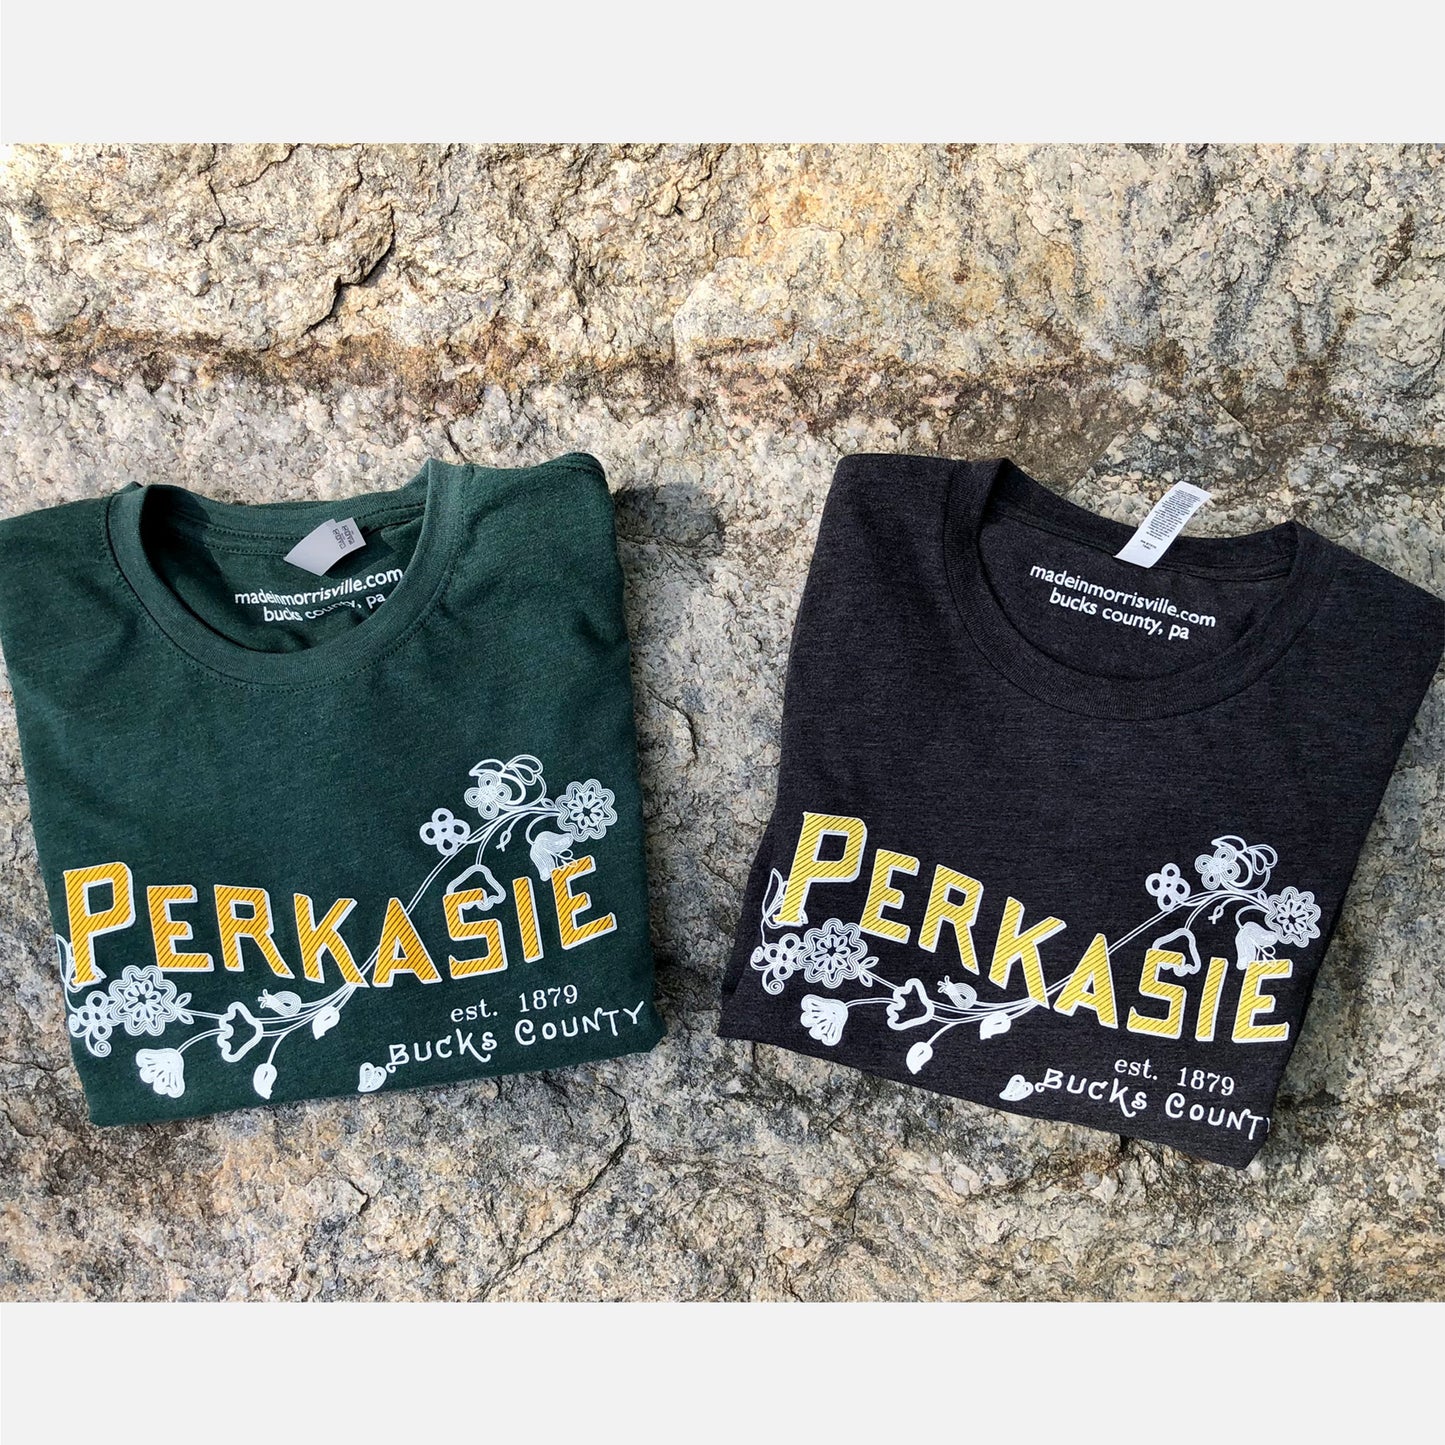 Perkasie/Lenape floral motif graphic Long Sleeve-shirt